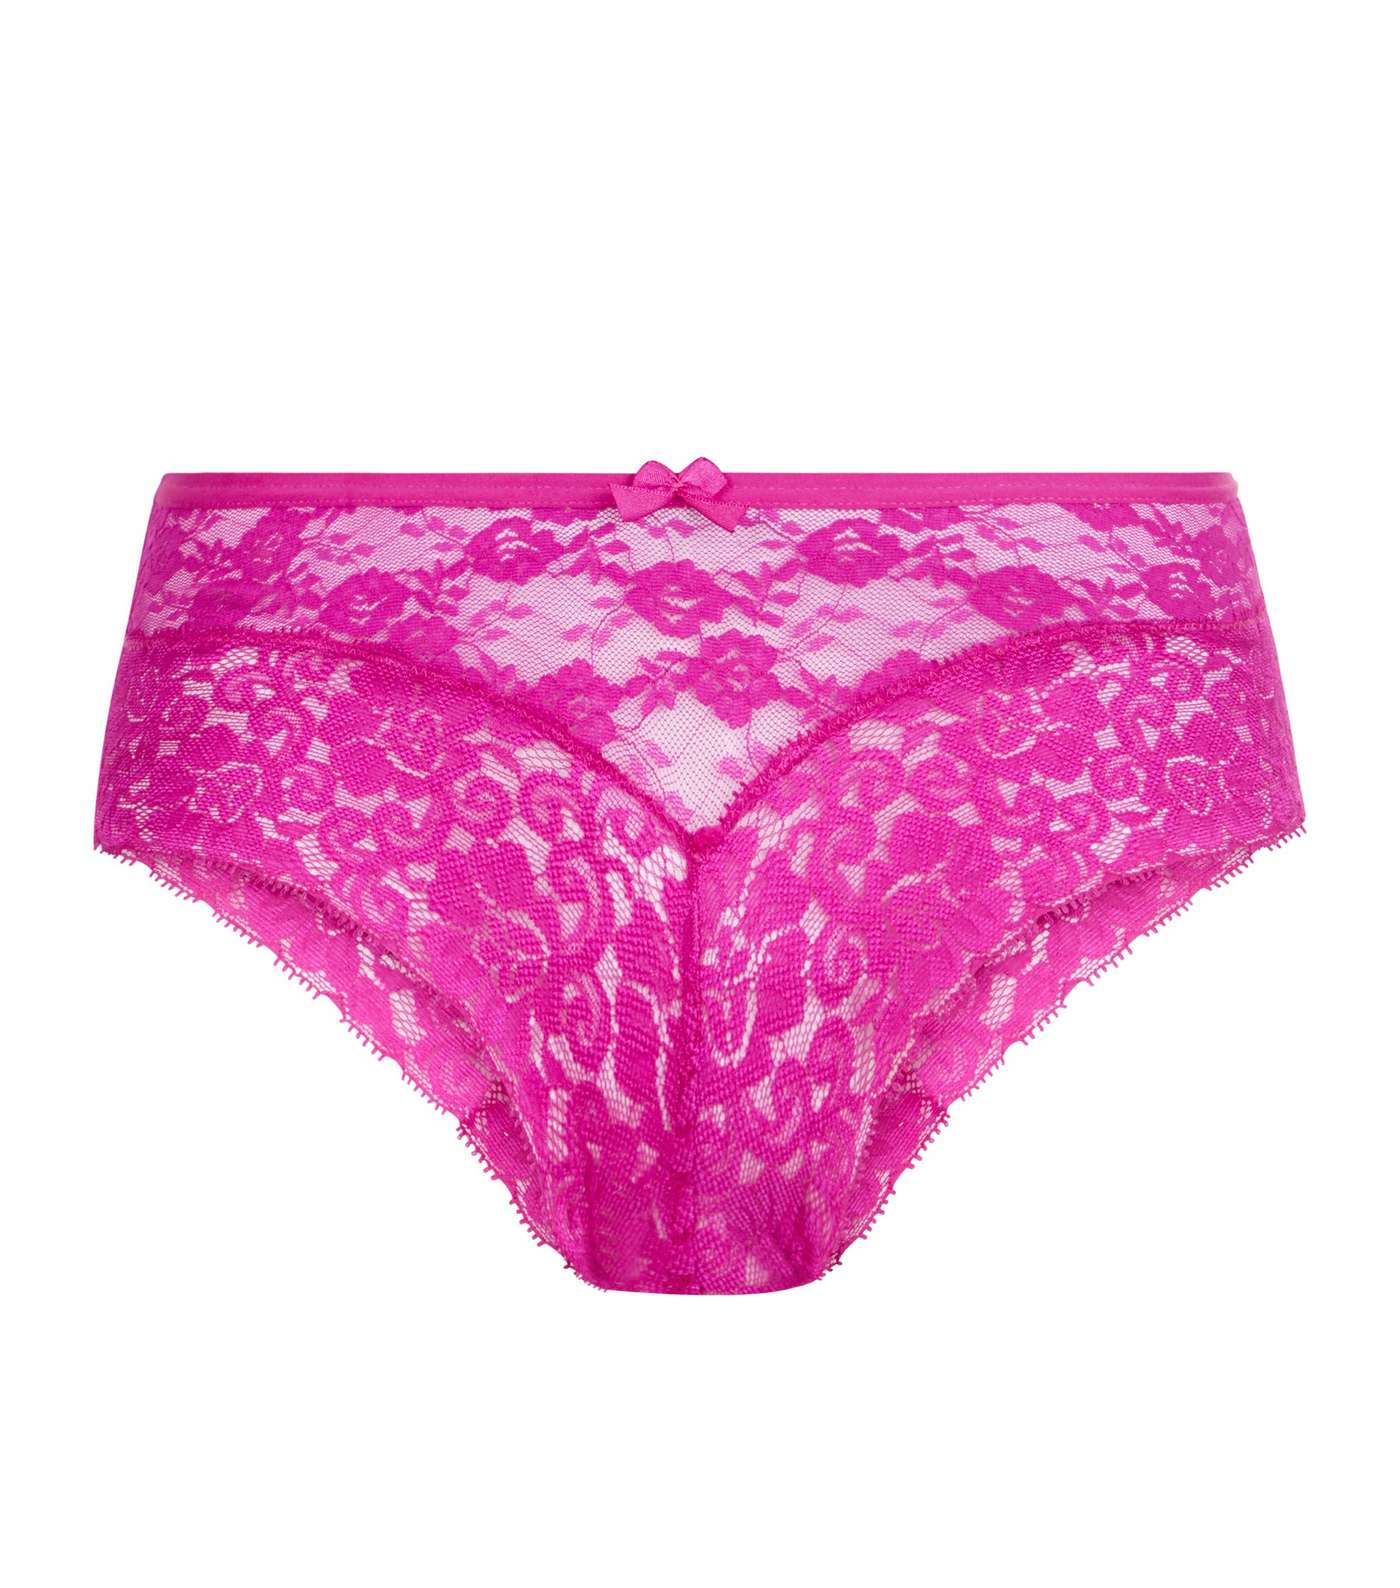 Bright Pink Lace Leg Brazilian Briefs Image 2